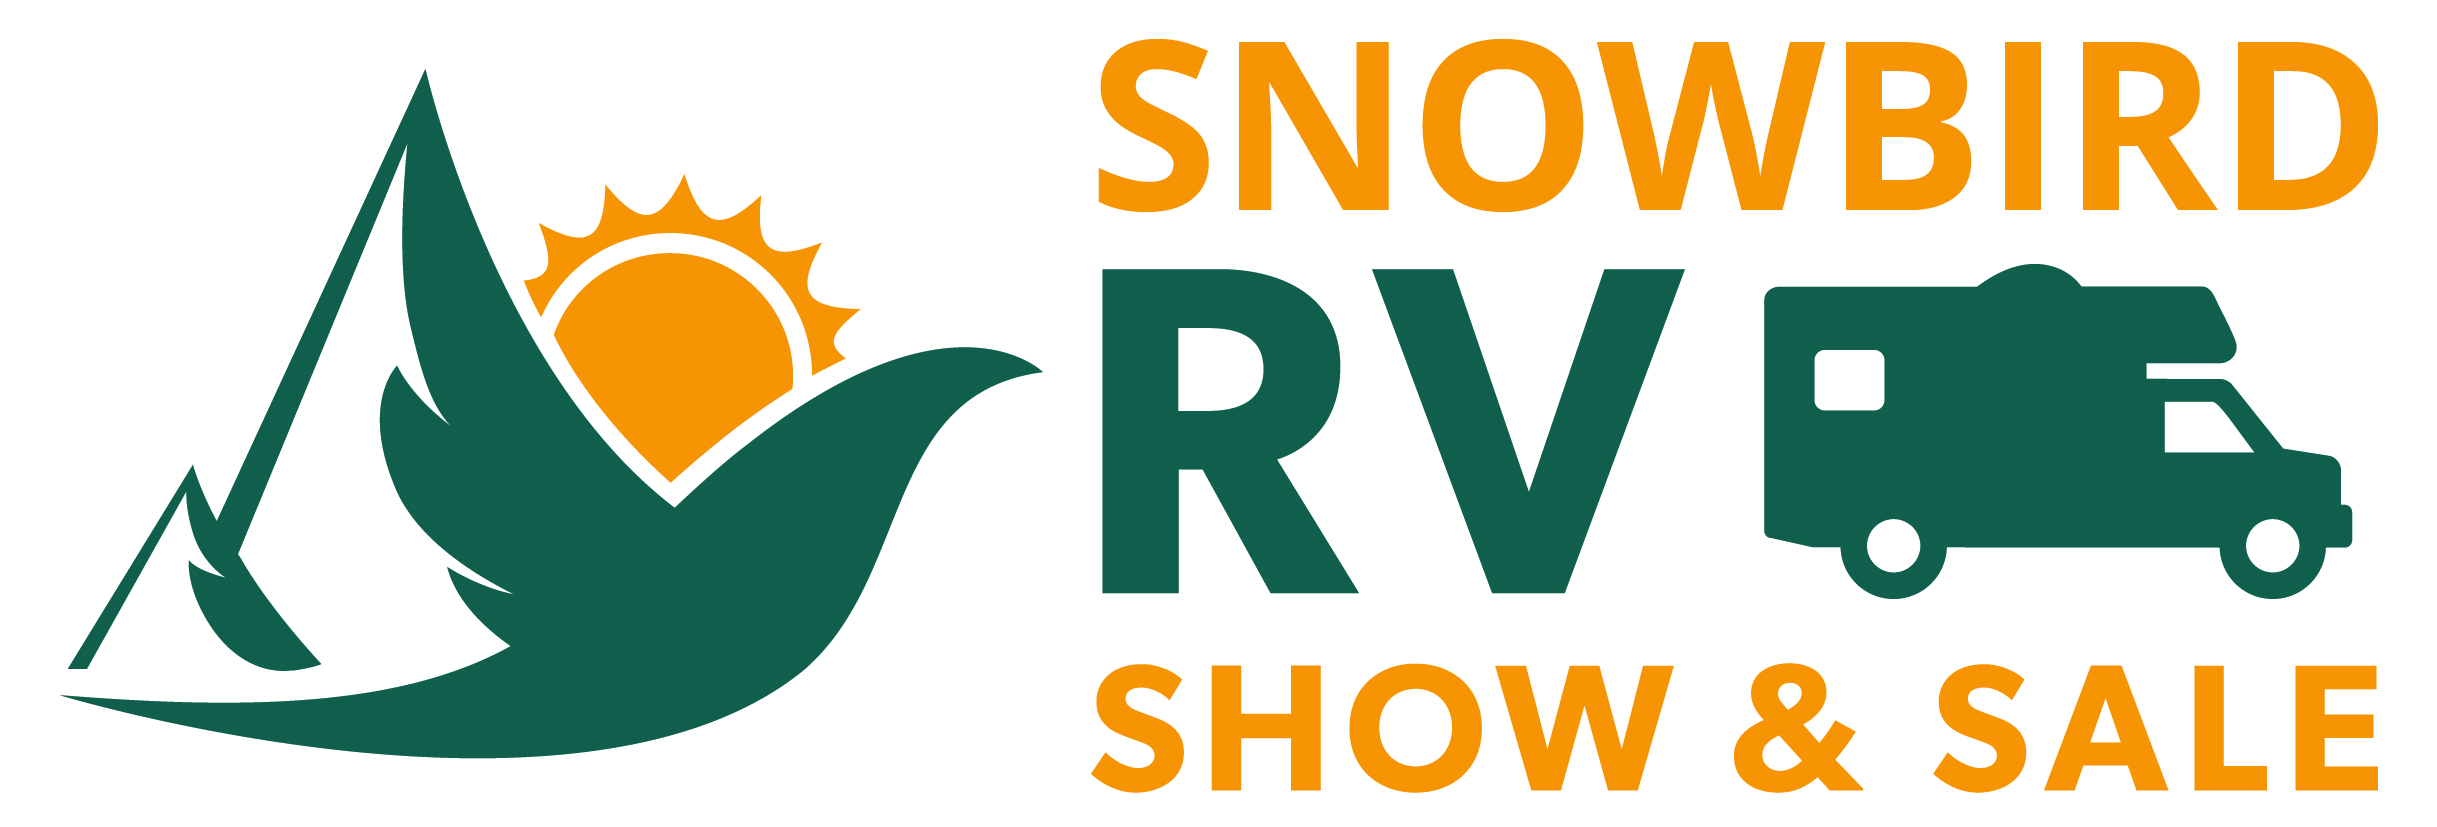 snowbird rv show